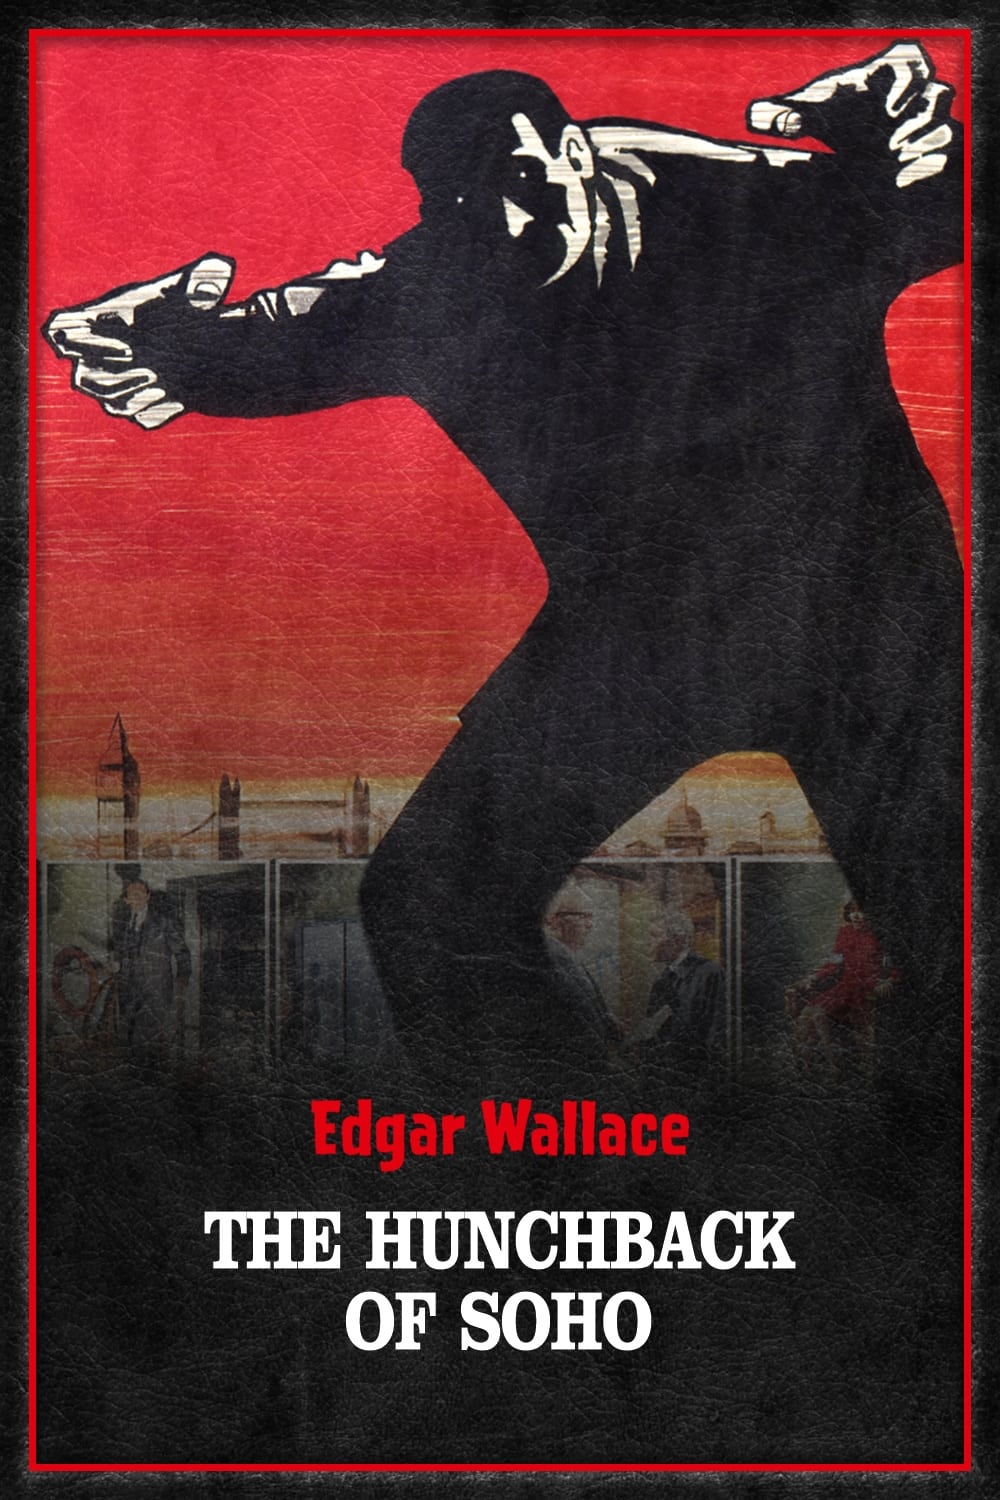 The Hunchback of Soho